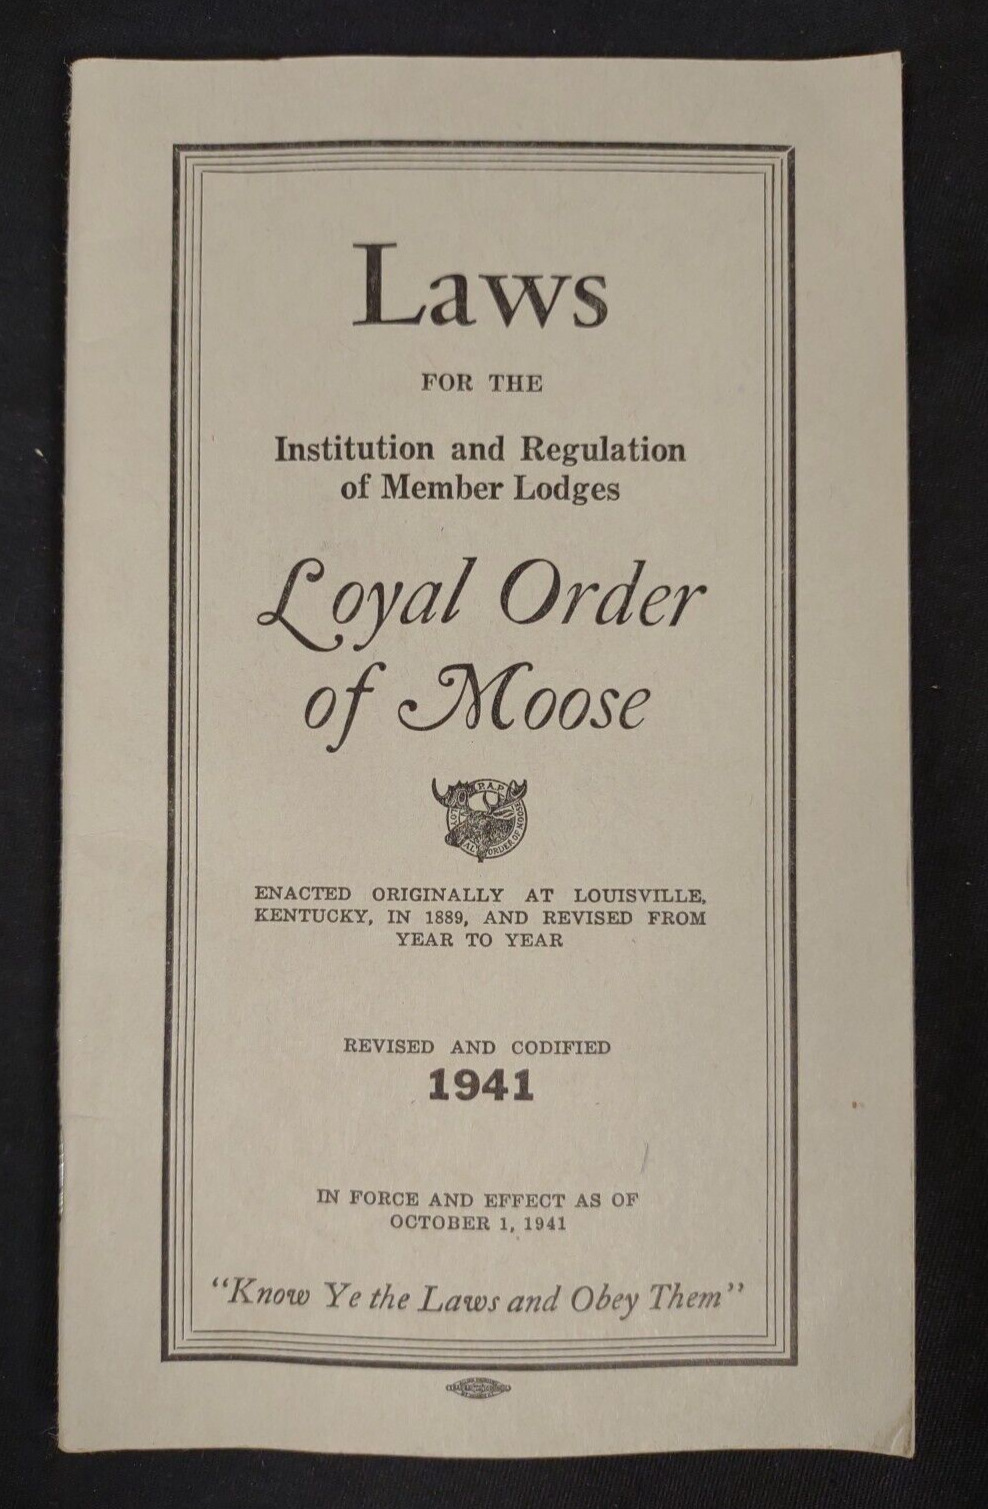 Loyal Order of Moose Laws for Institution and Regulation of Member Lodges 1941